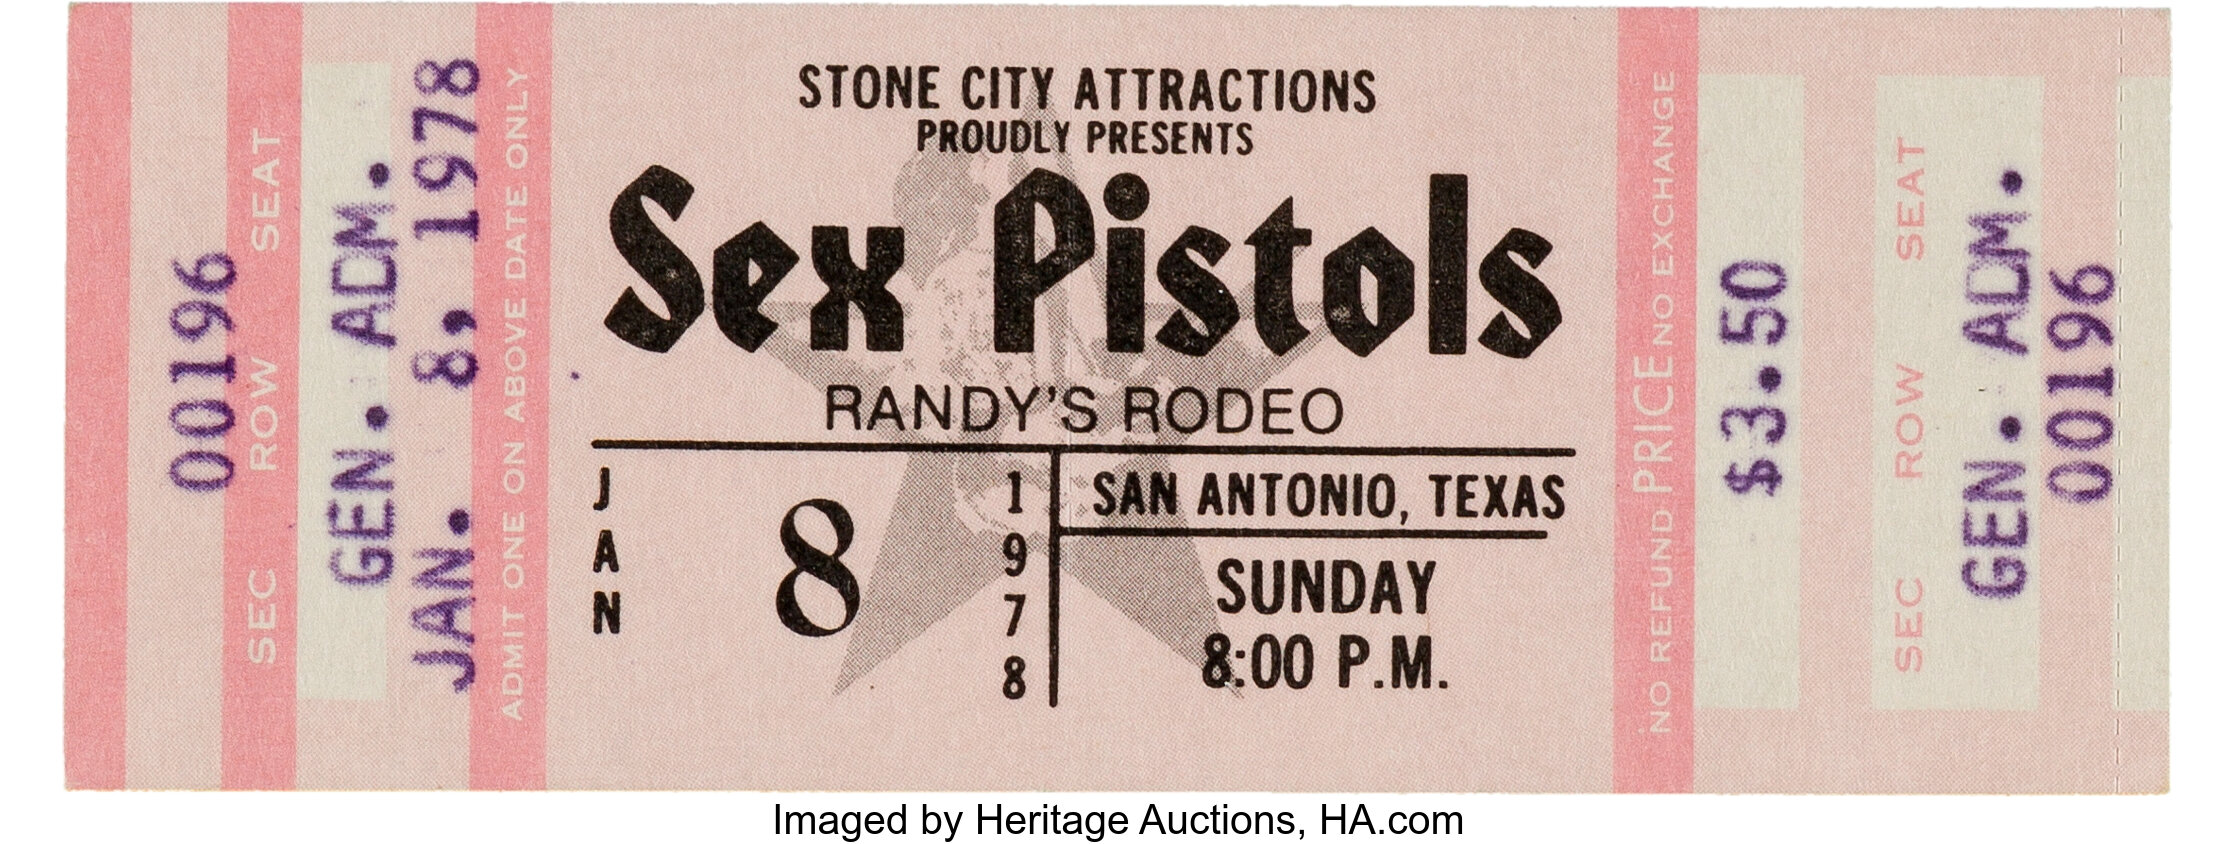 Sex Pistols Randys Rodeo Unused Concert Ticket Stone City Lot 